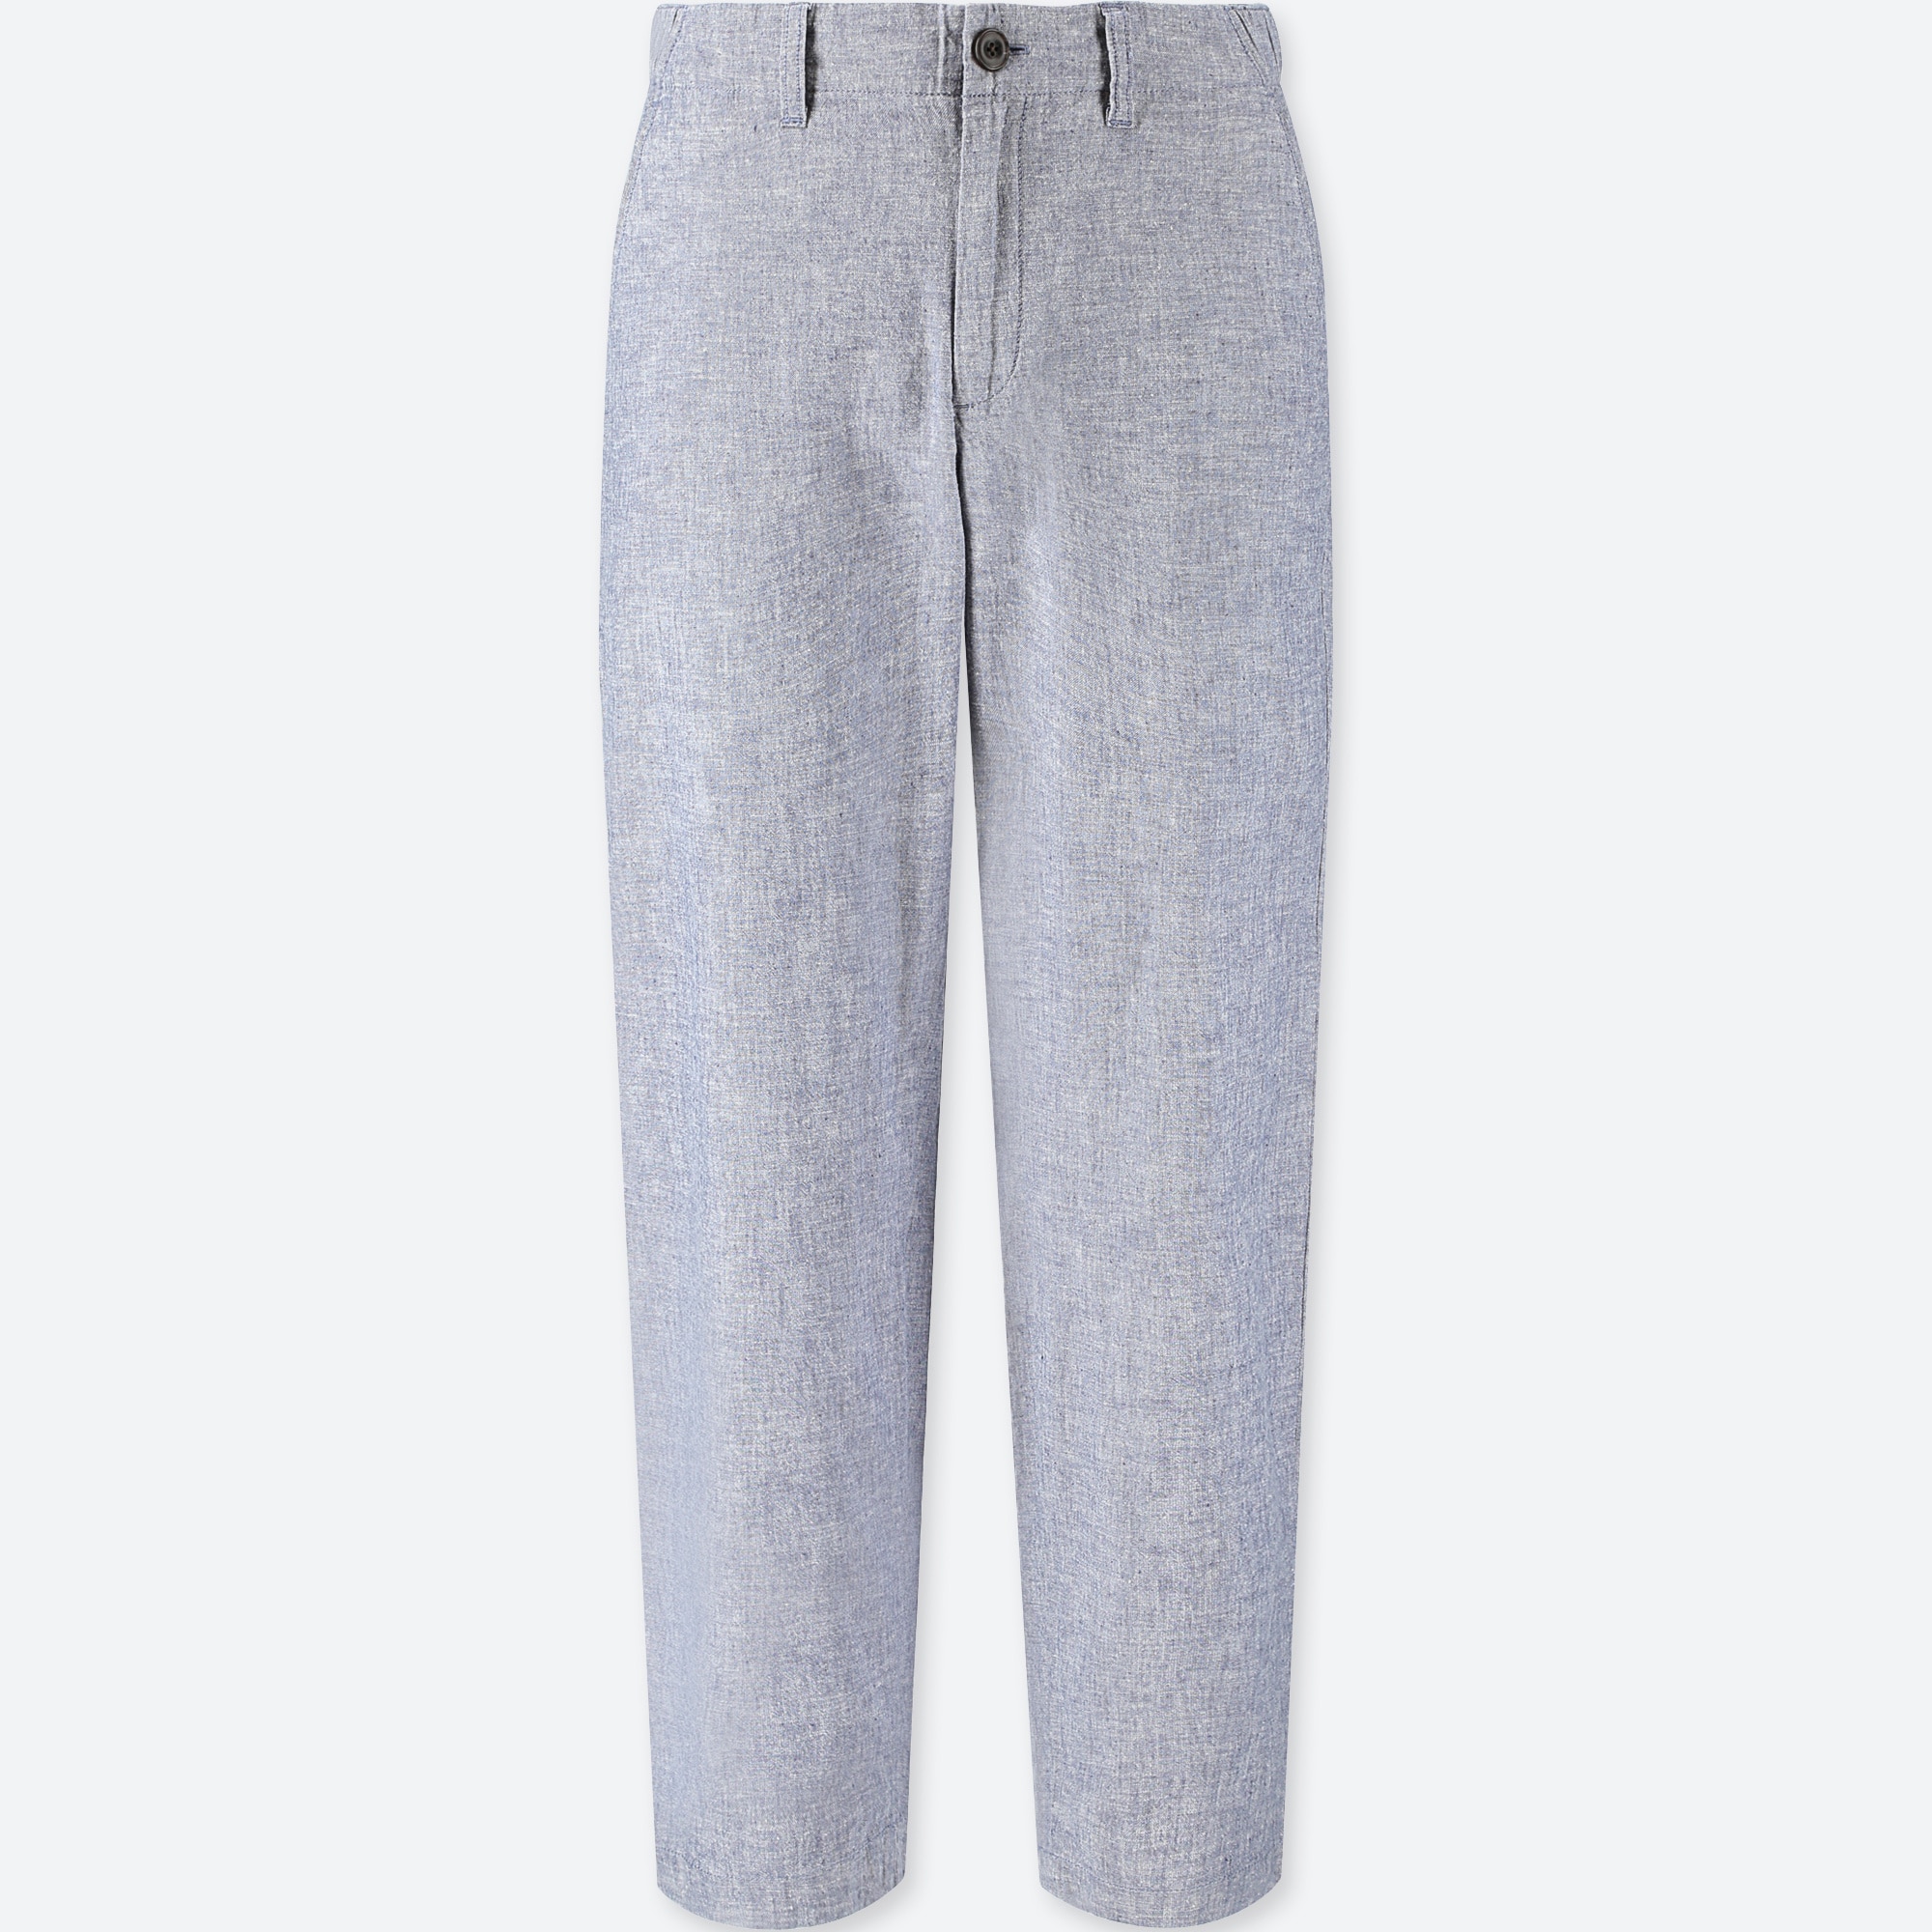 womens gray casual pants